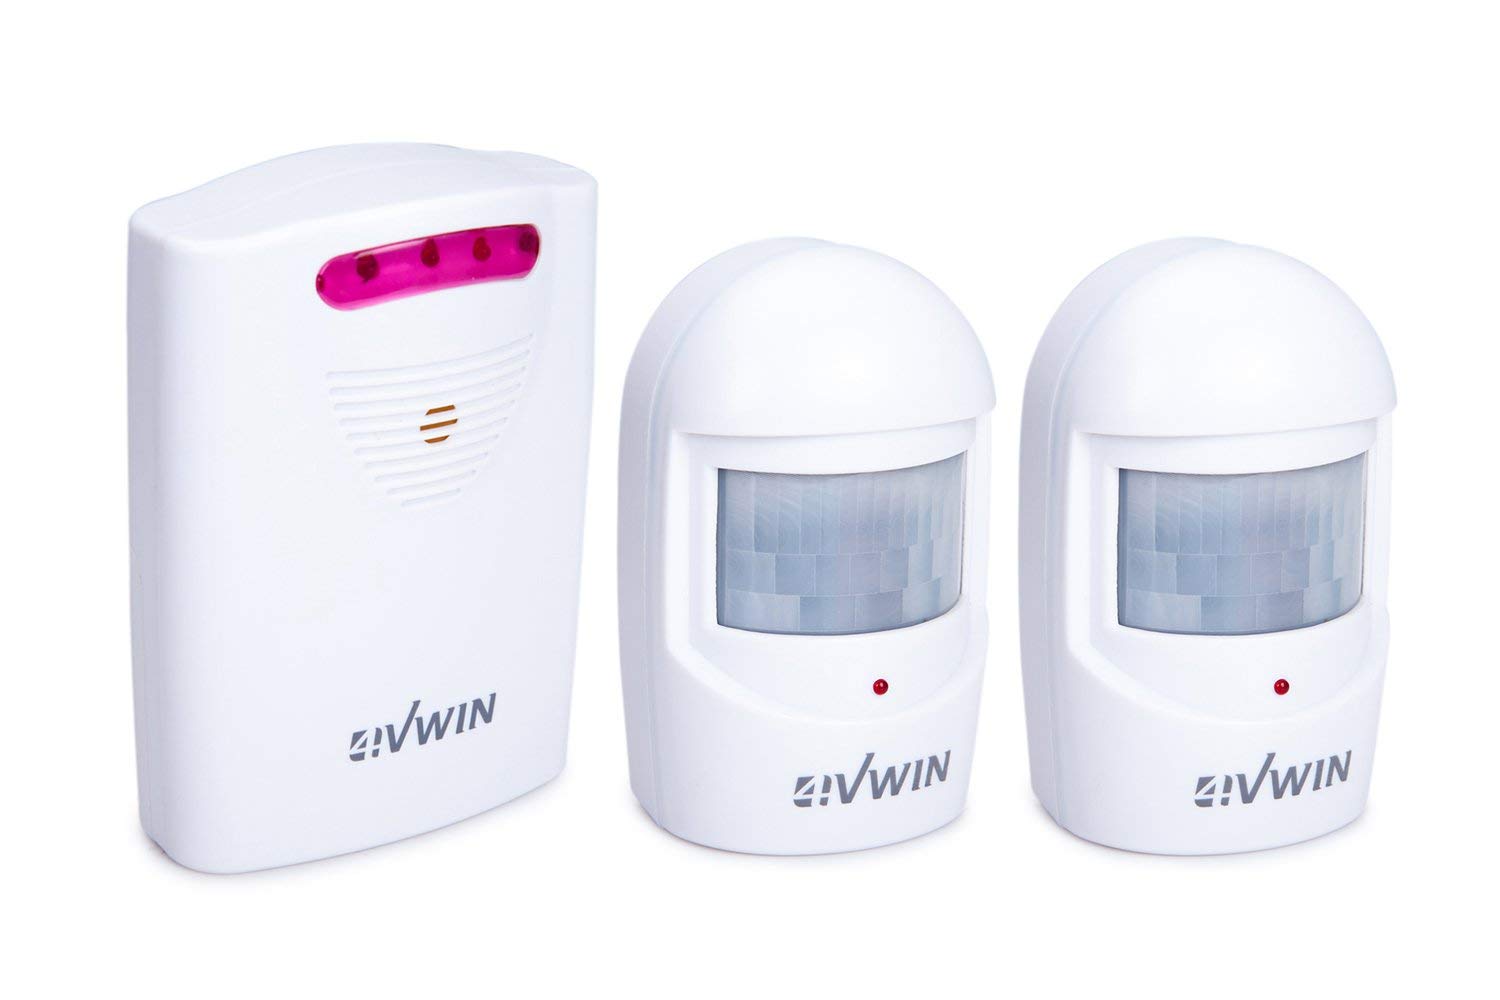 4VWIN Home Security Driveway Alarm 1 Receiver and 2 PIR Motion Sensor Detector Alert System Kit